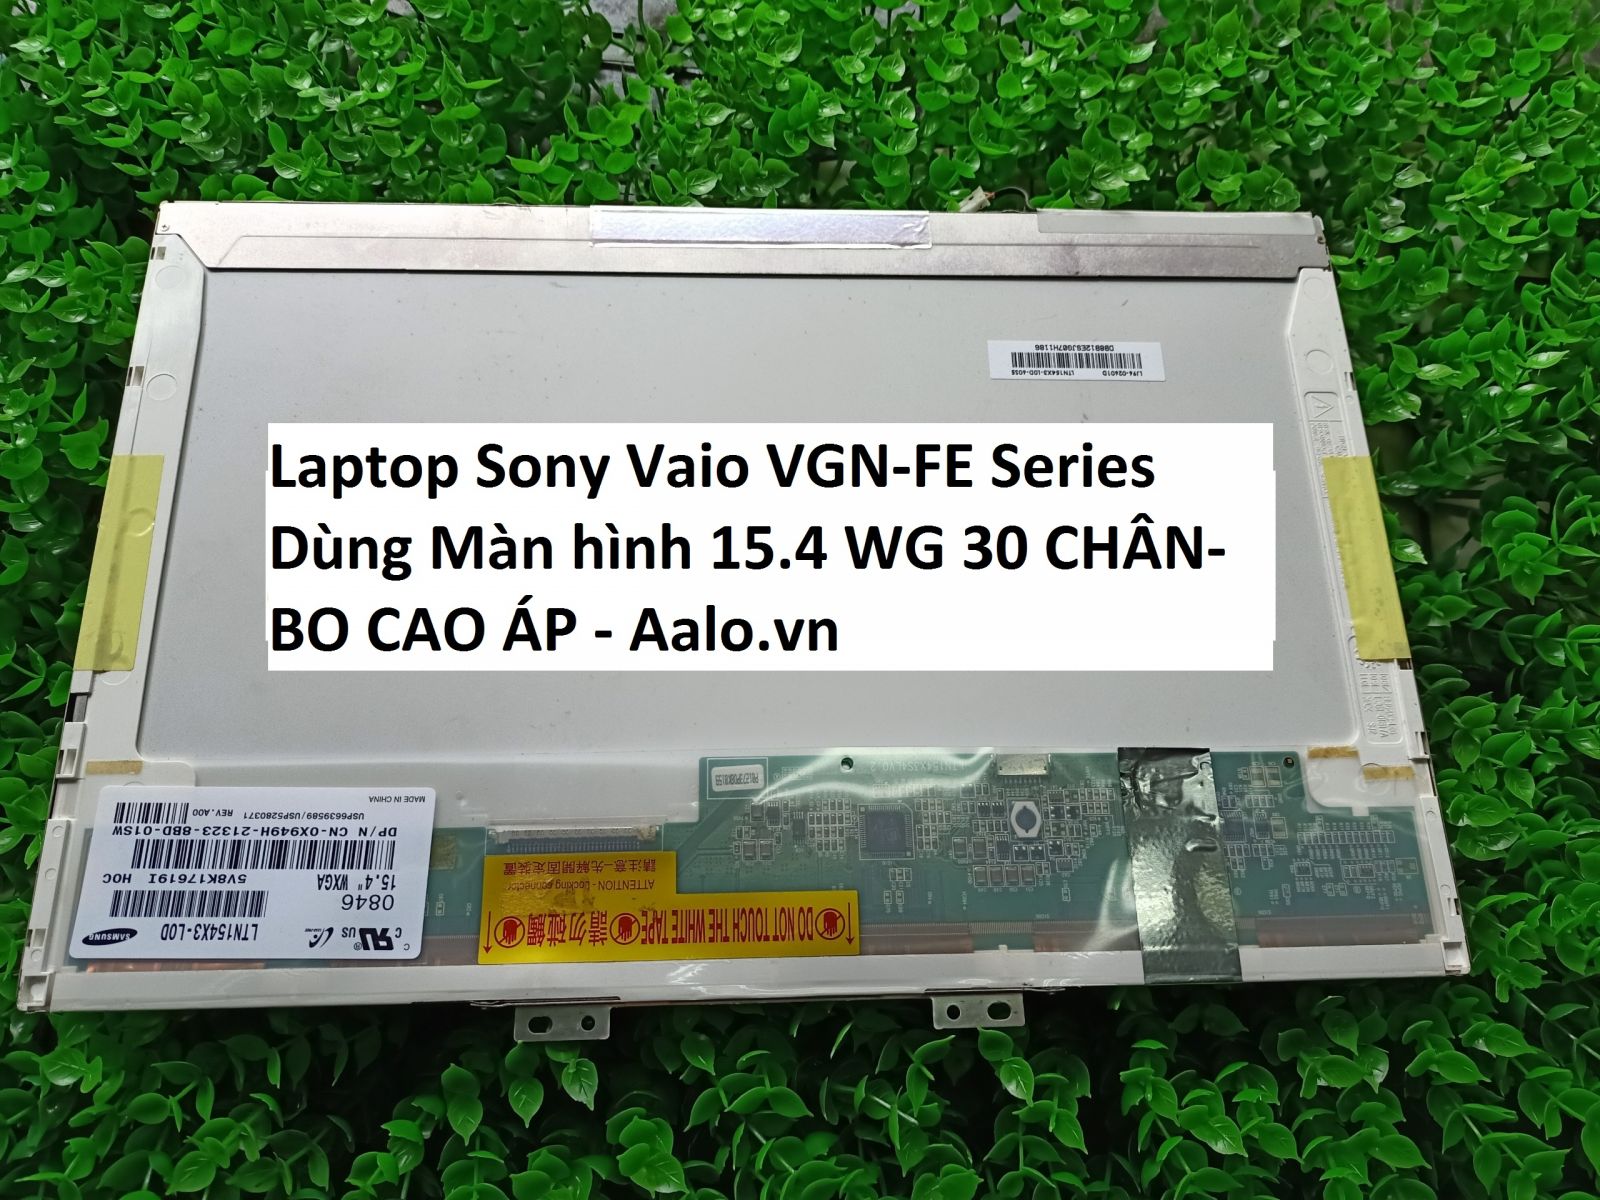 Màn hình Laptop Sony Vaio VGN-FE Series - Aalo.vn